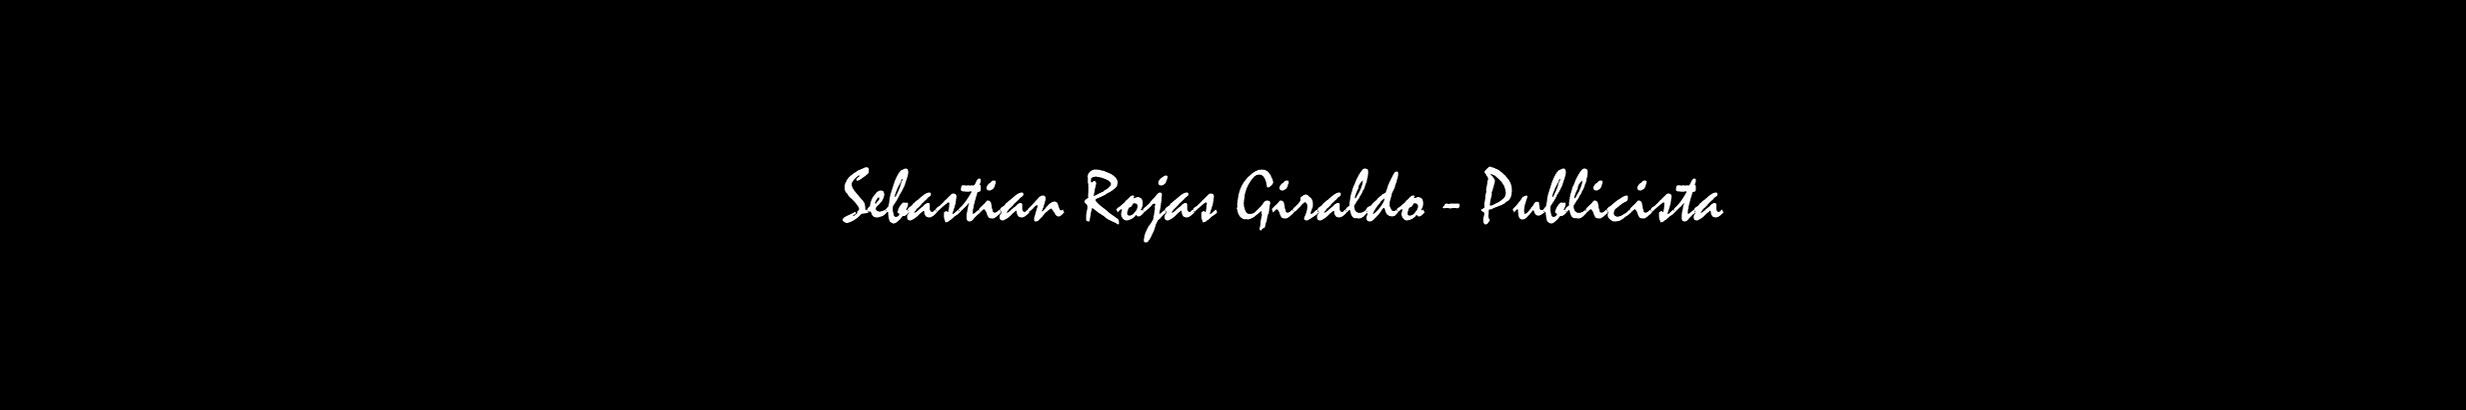 Баннер профиля Sebastian Rojas Giraldo